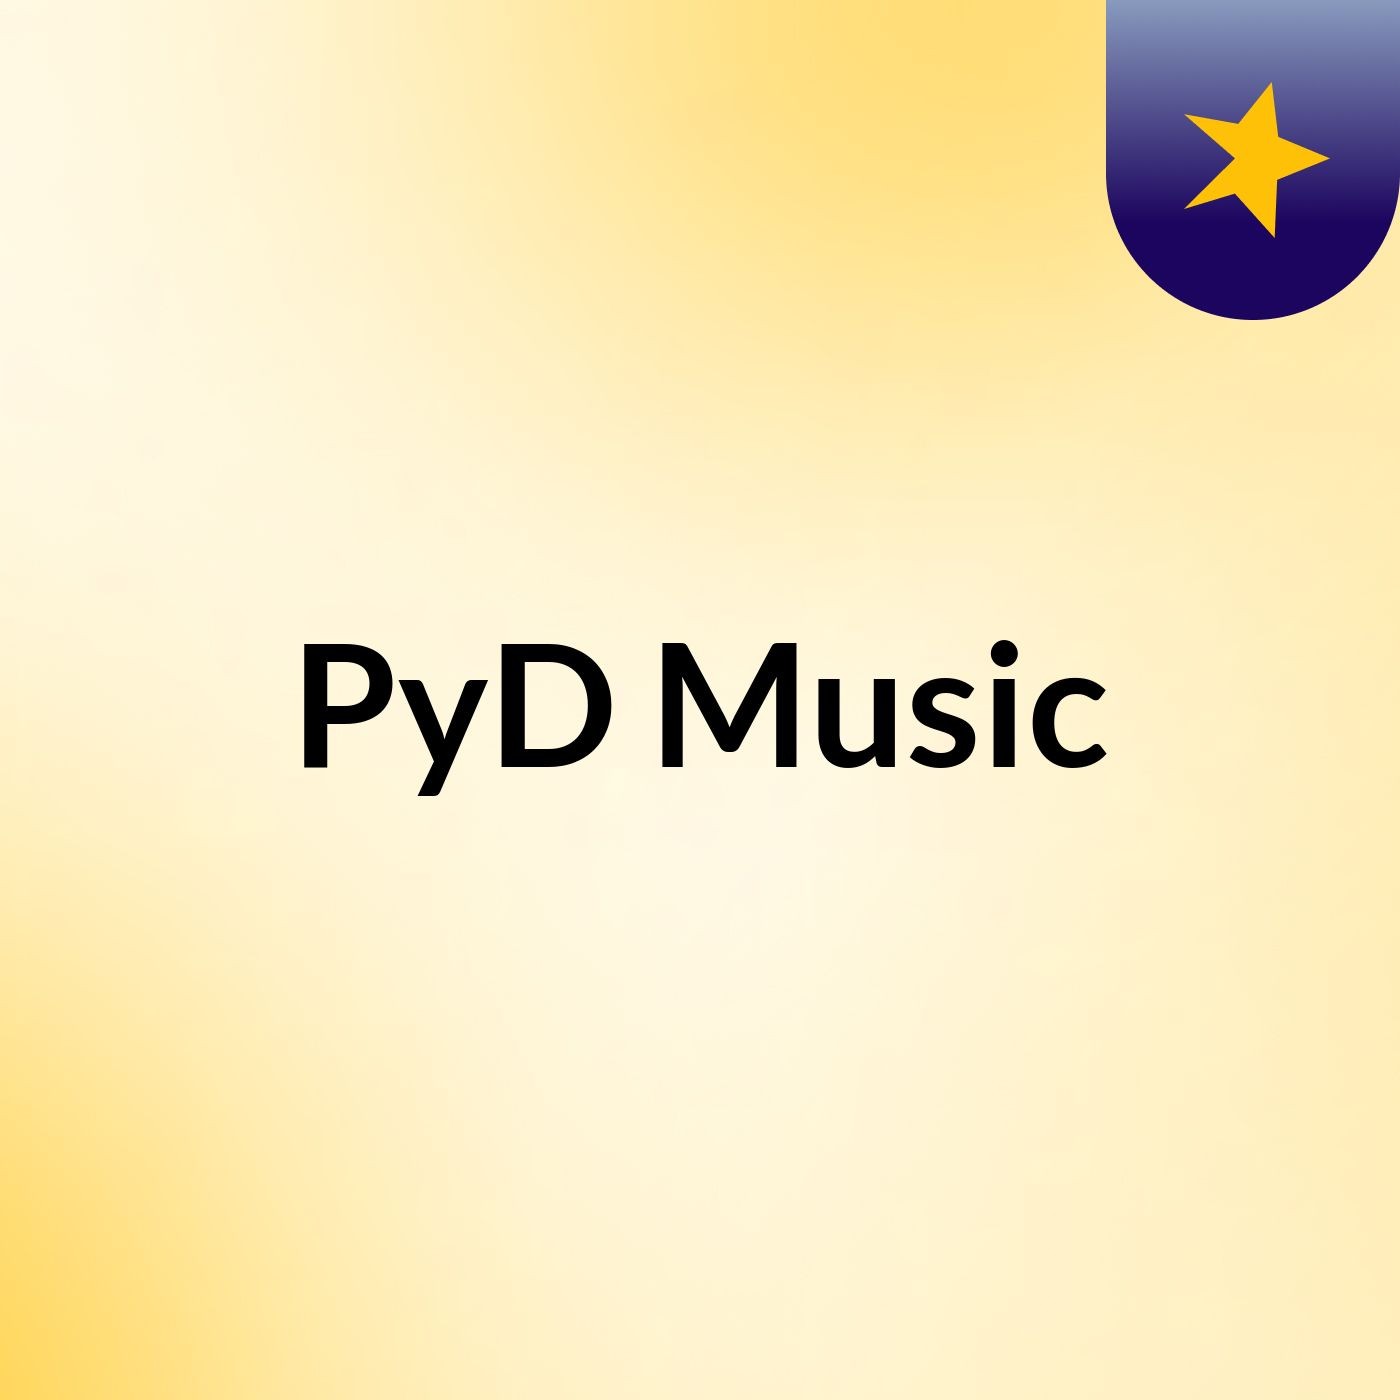 PyD Music